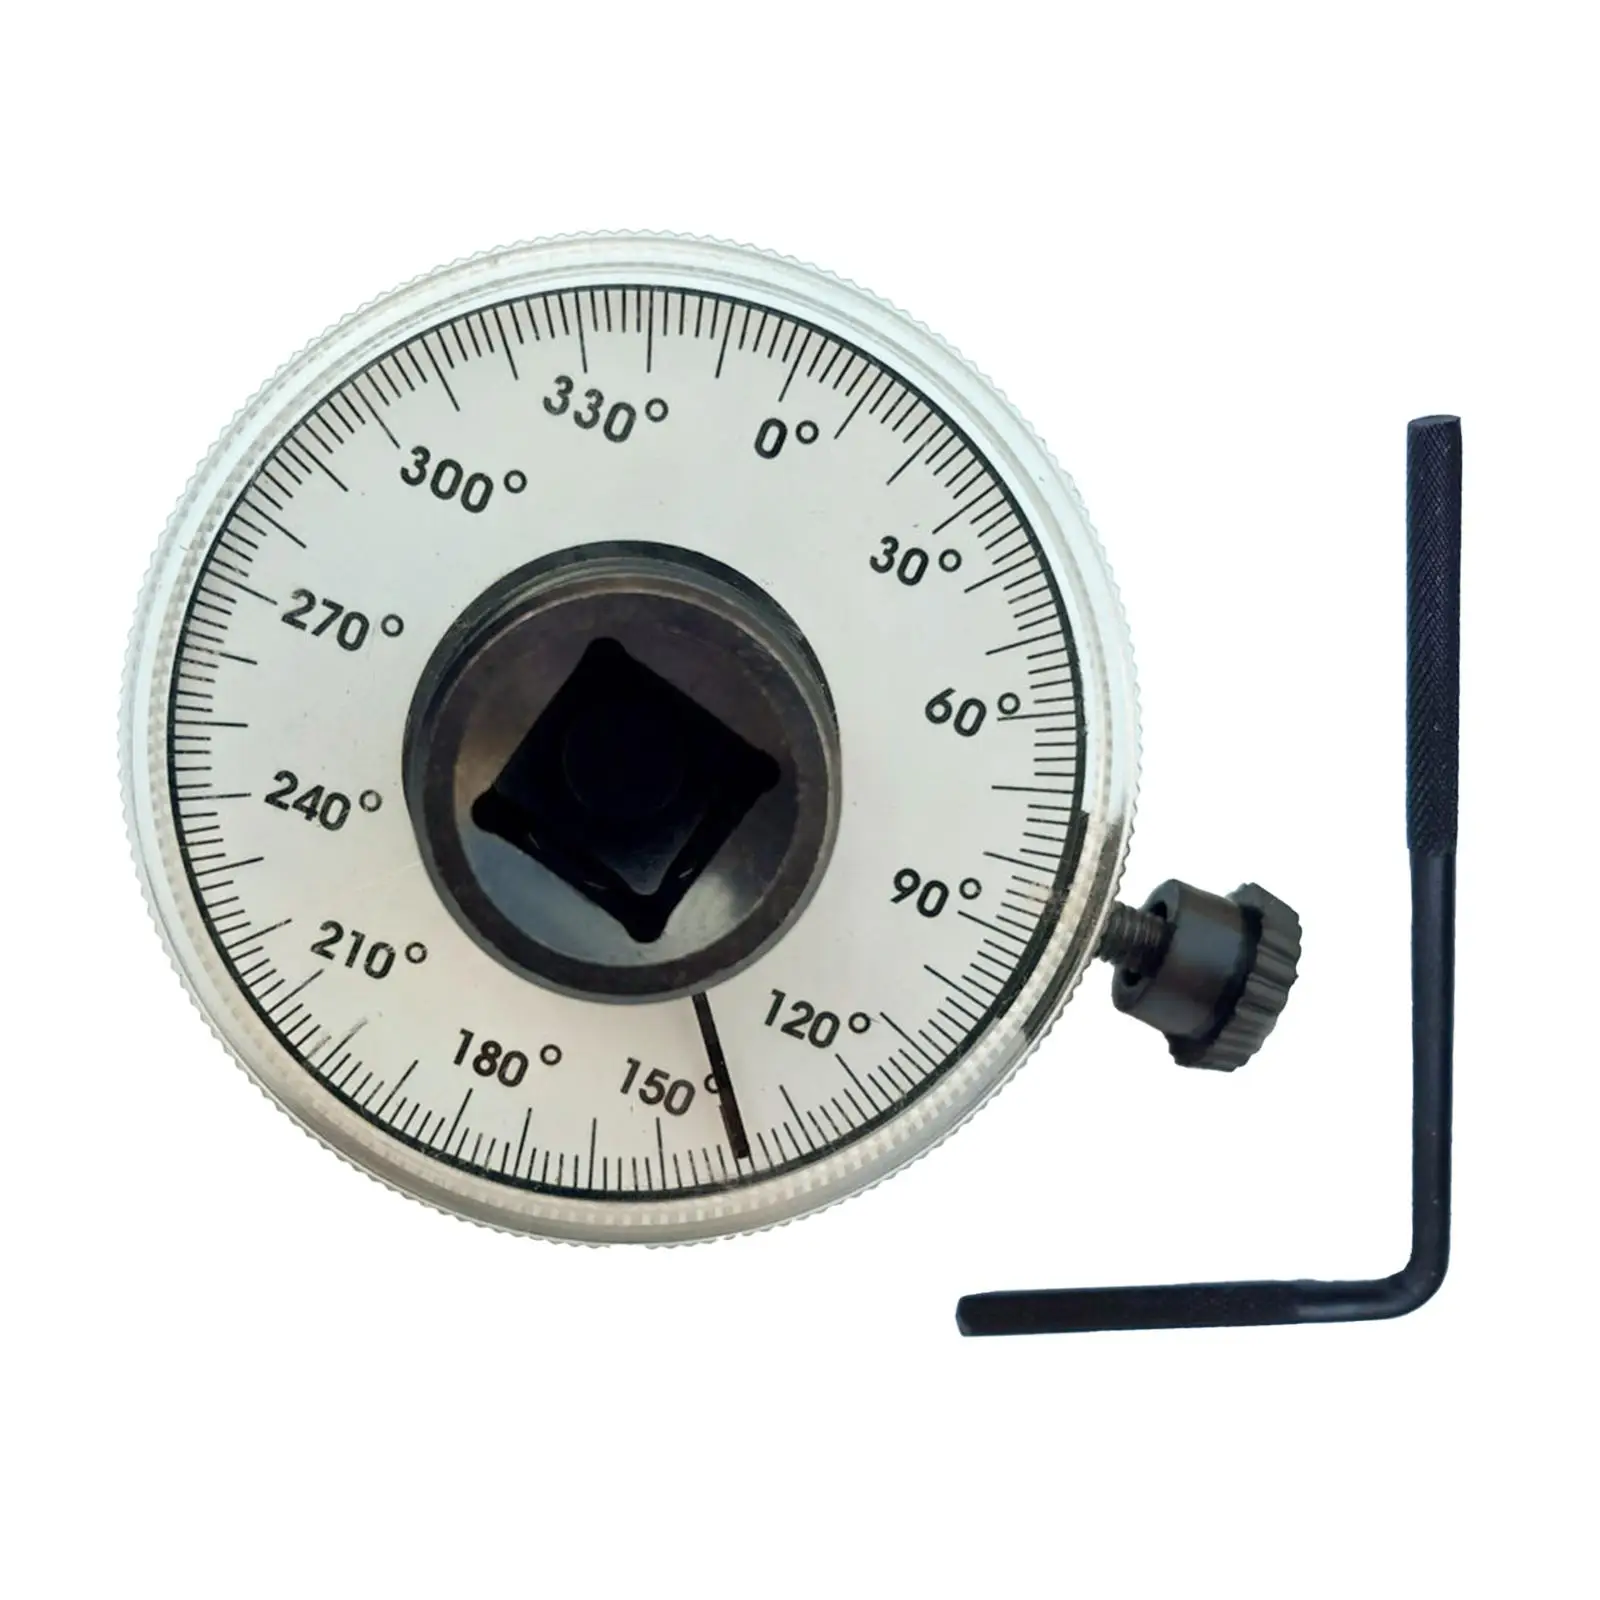 Magnetic Torque Angle Meter Rotation Tester Garage Tool Check Meter Durable 360°Adjustable Premium 1/2